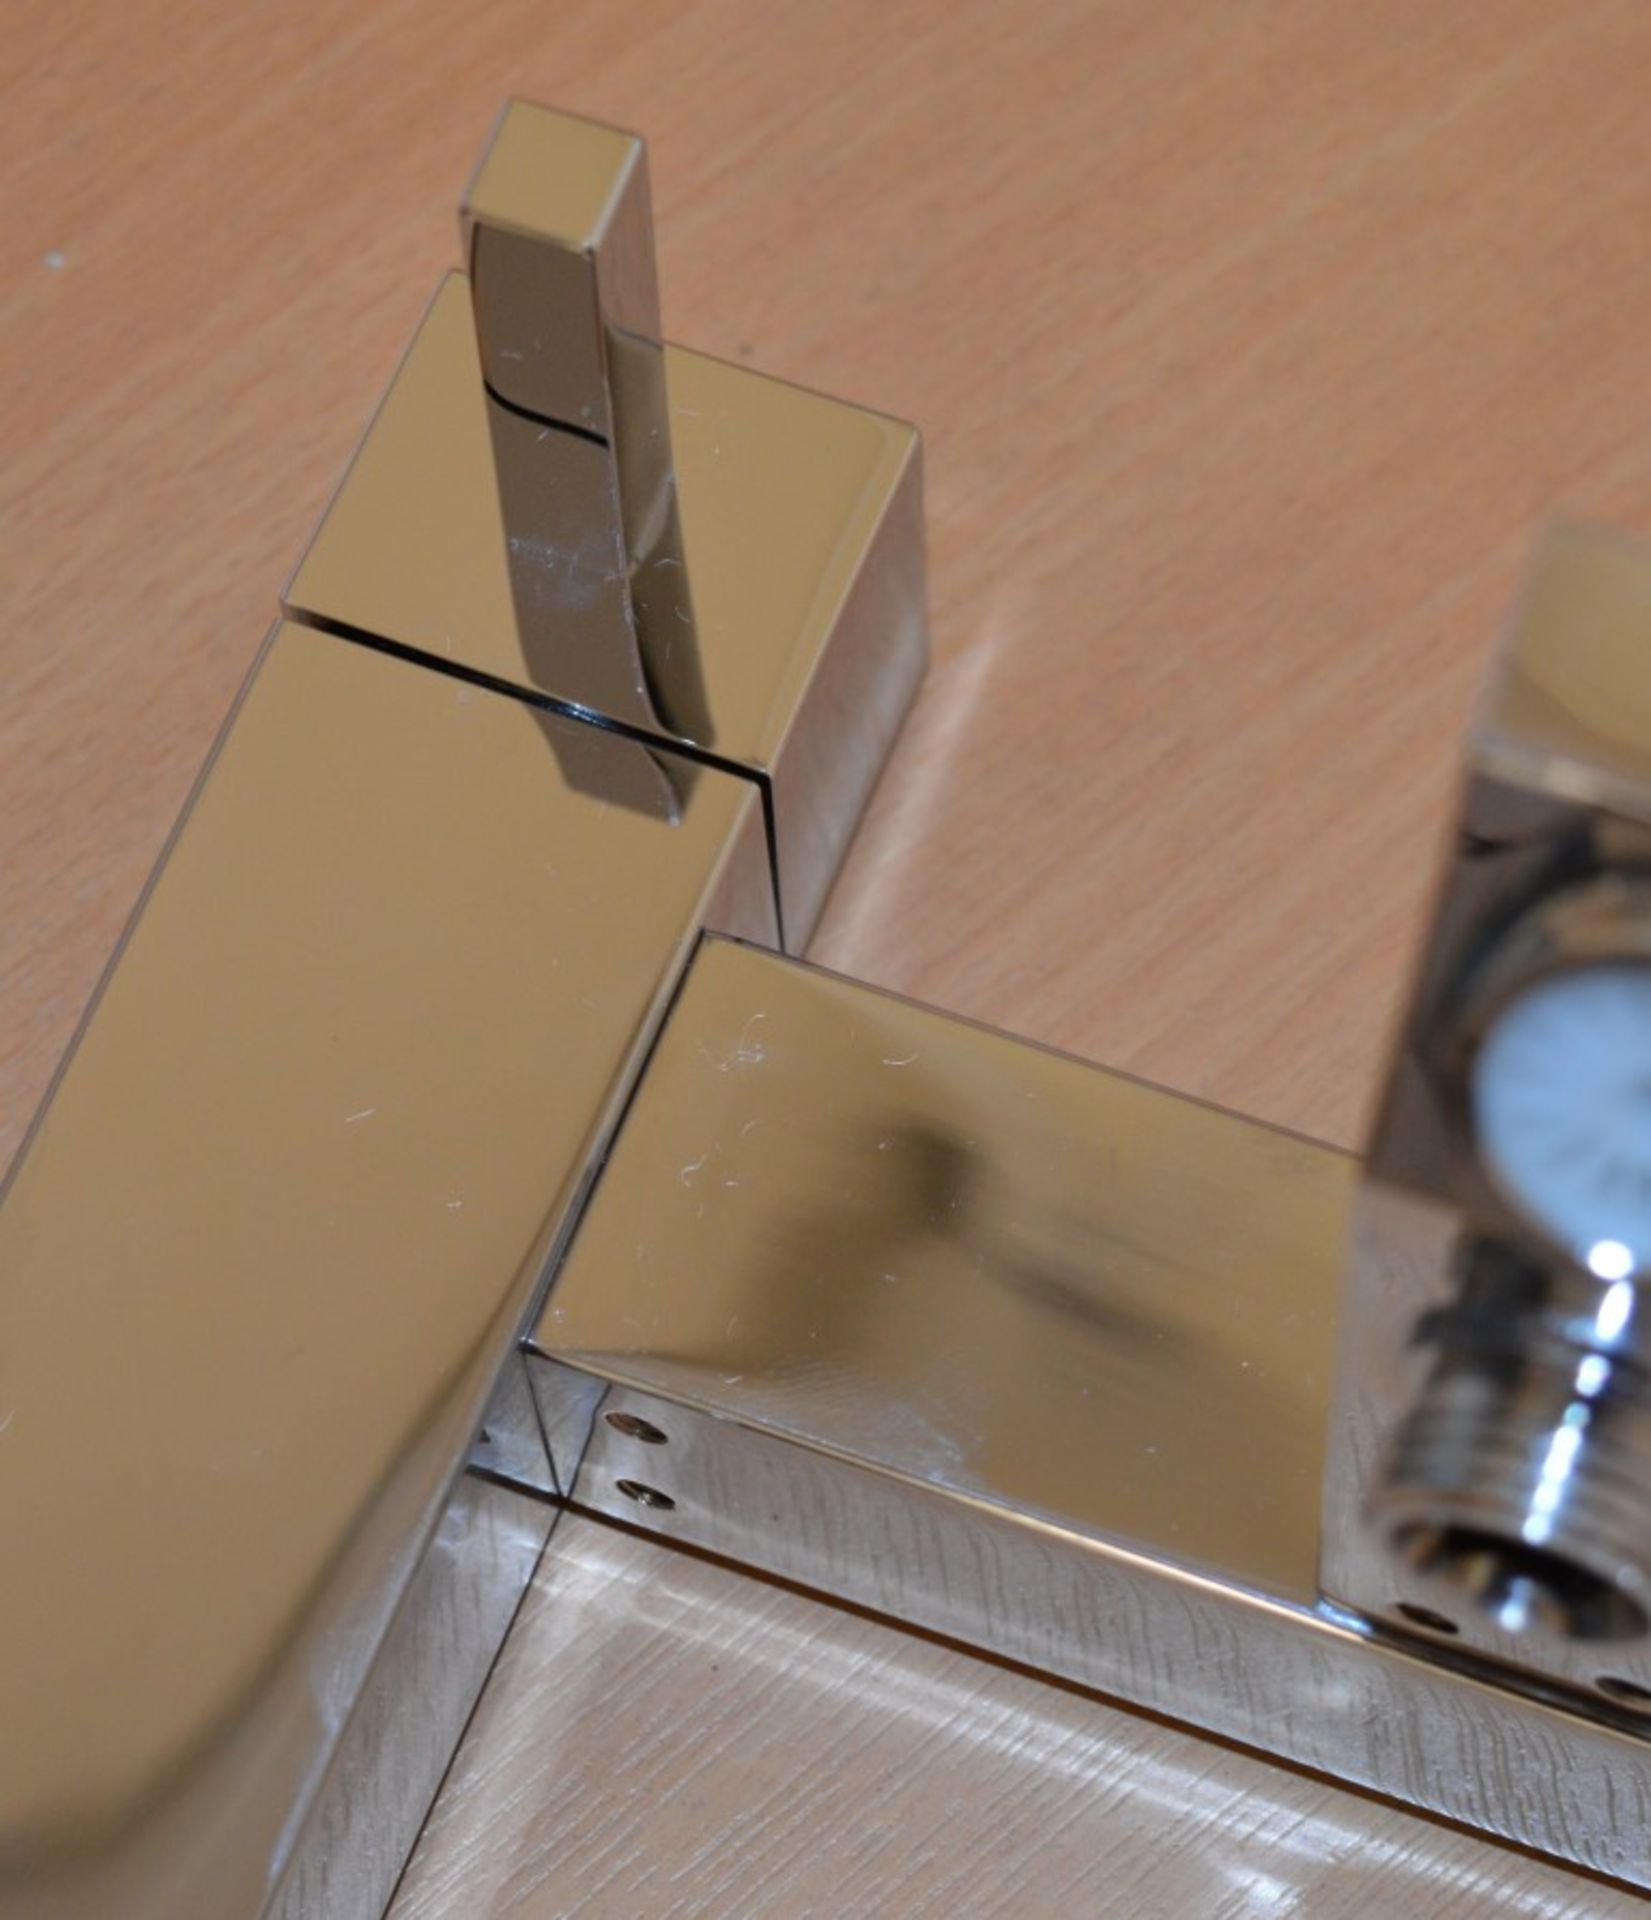 1 x Verona Deck Bath Shower Mixer Tap - Vogue Bathrooms - Modern Bath Mixer Tap in Bright Chrome - Image 9 of 16